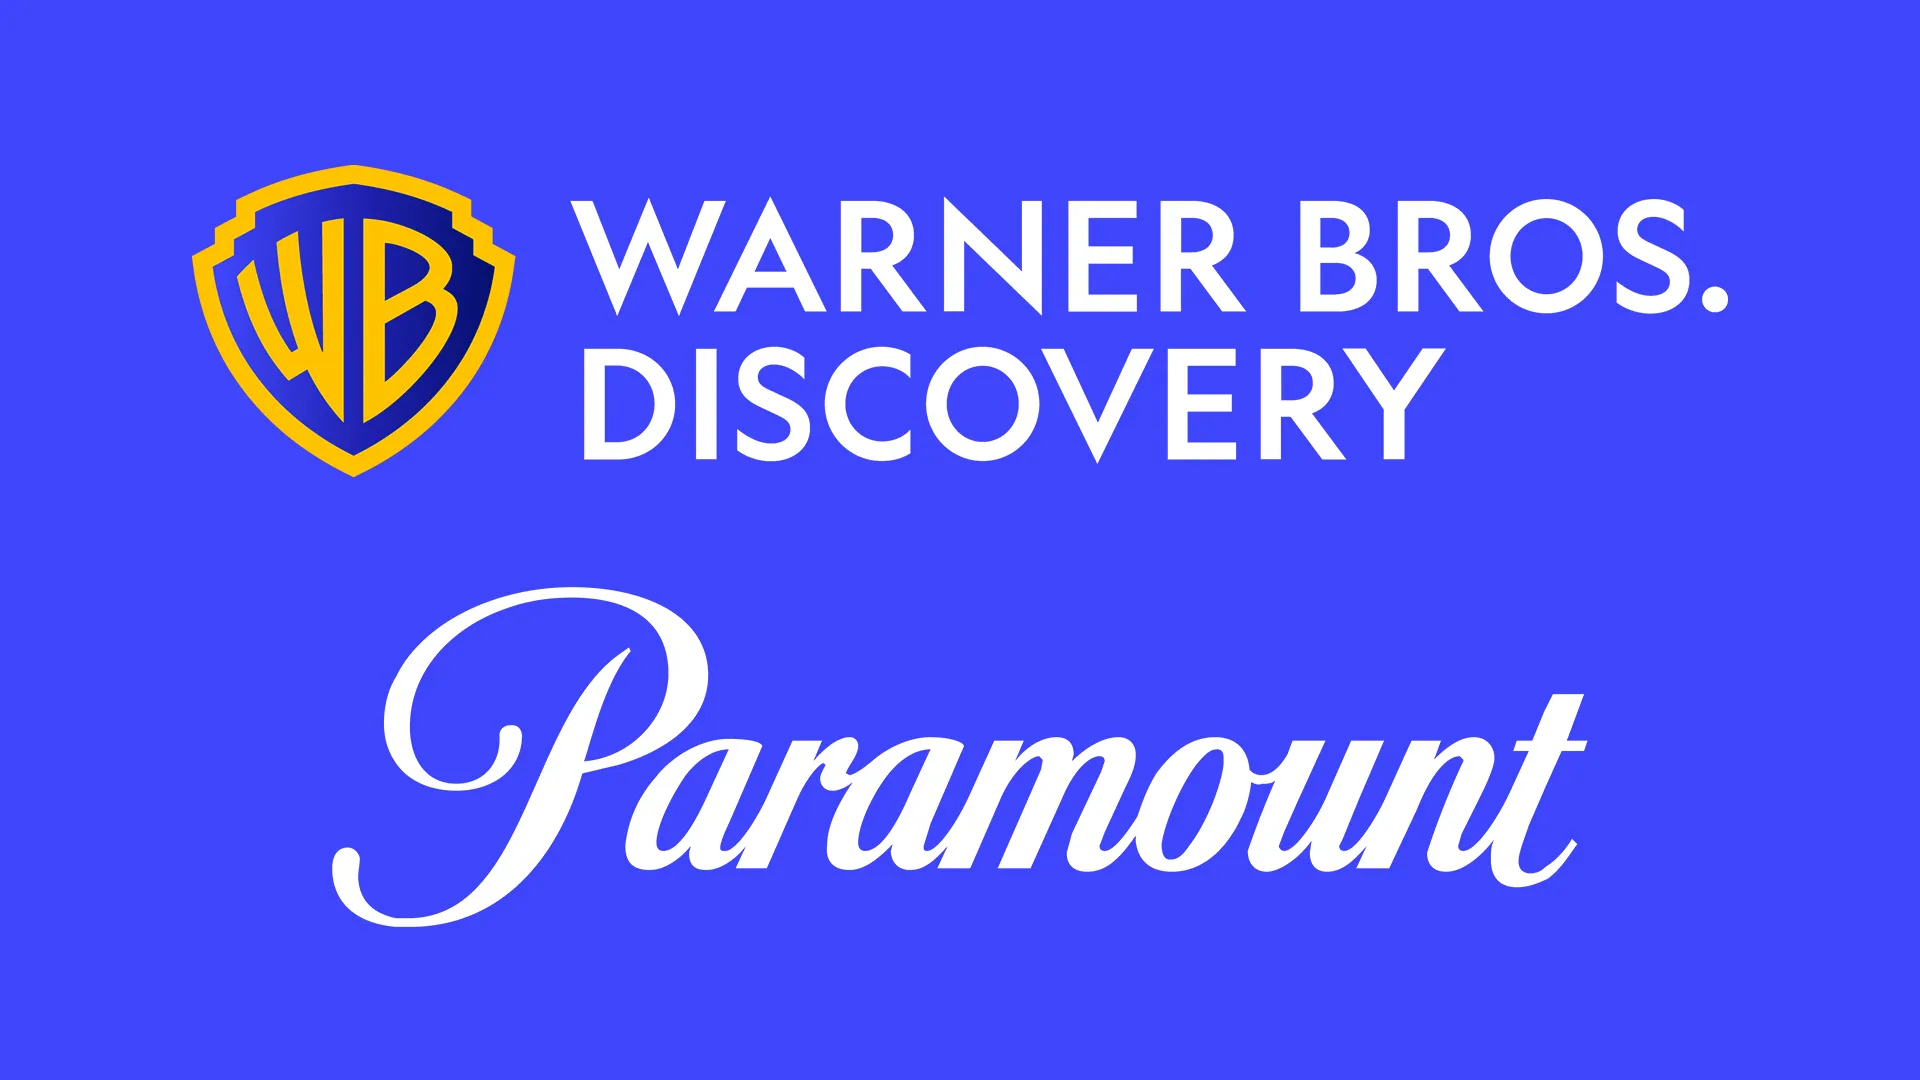 Warner Bros. Discovery | Paramount